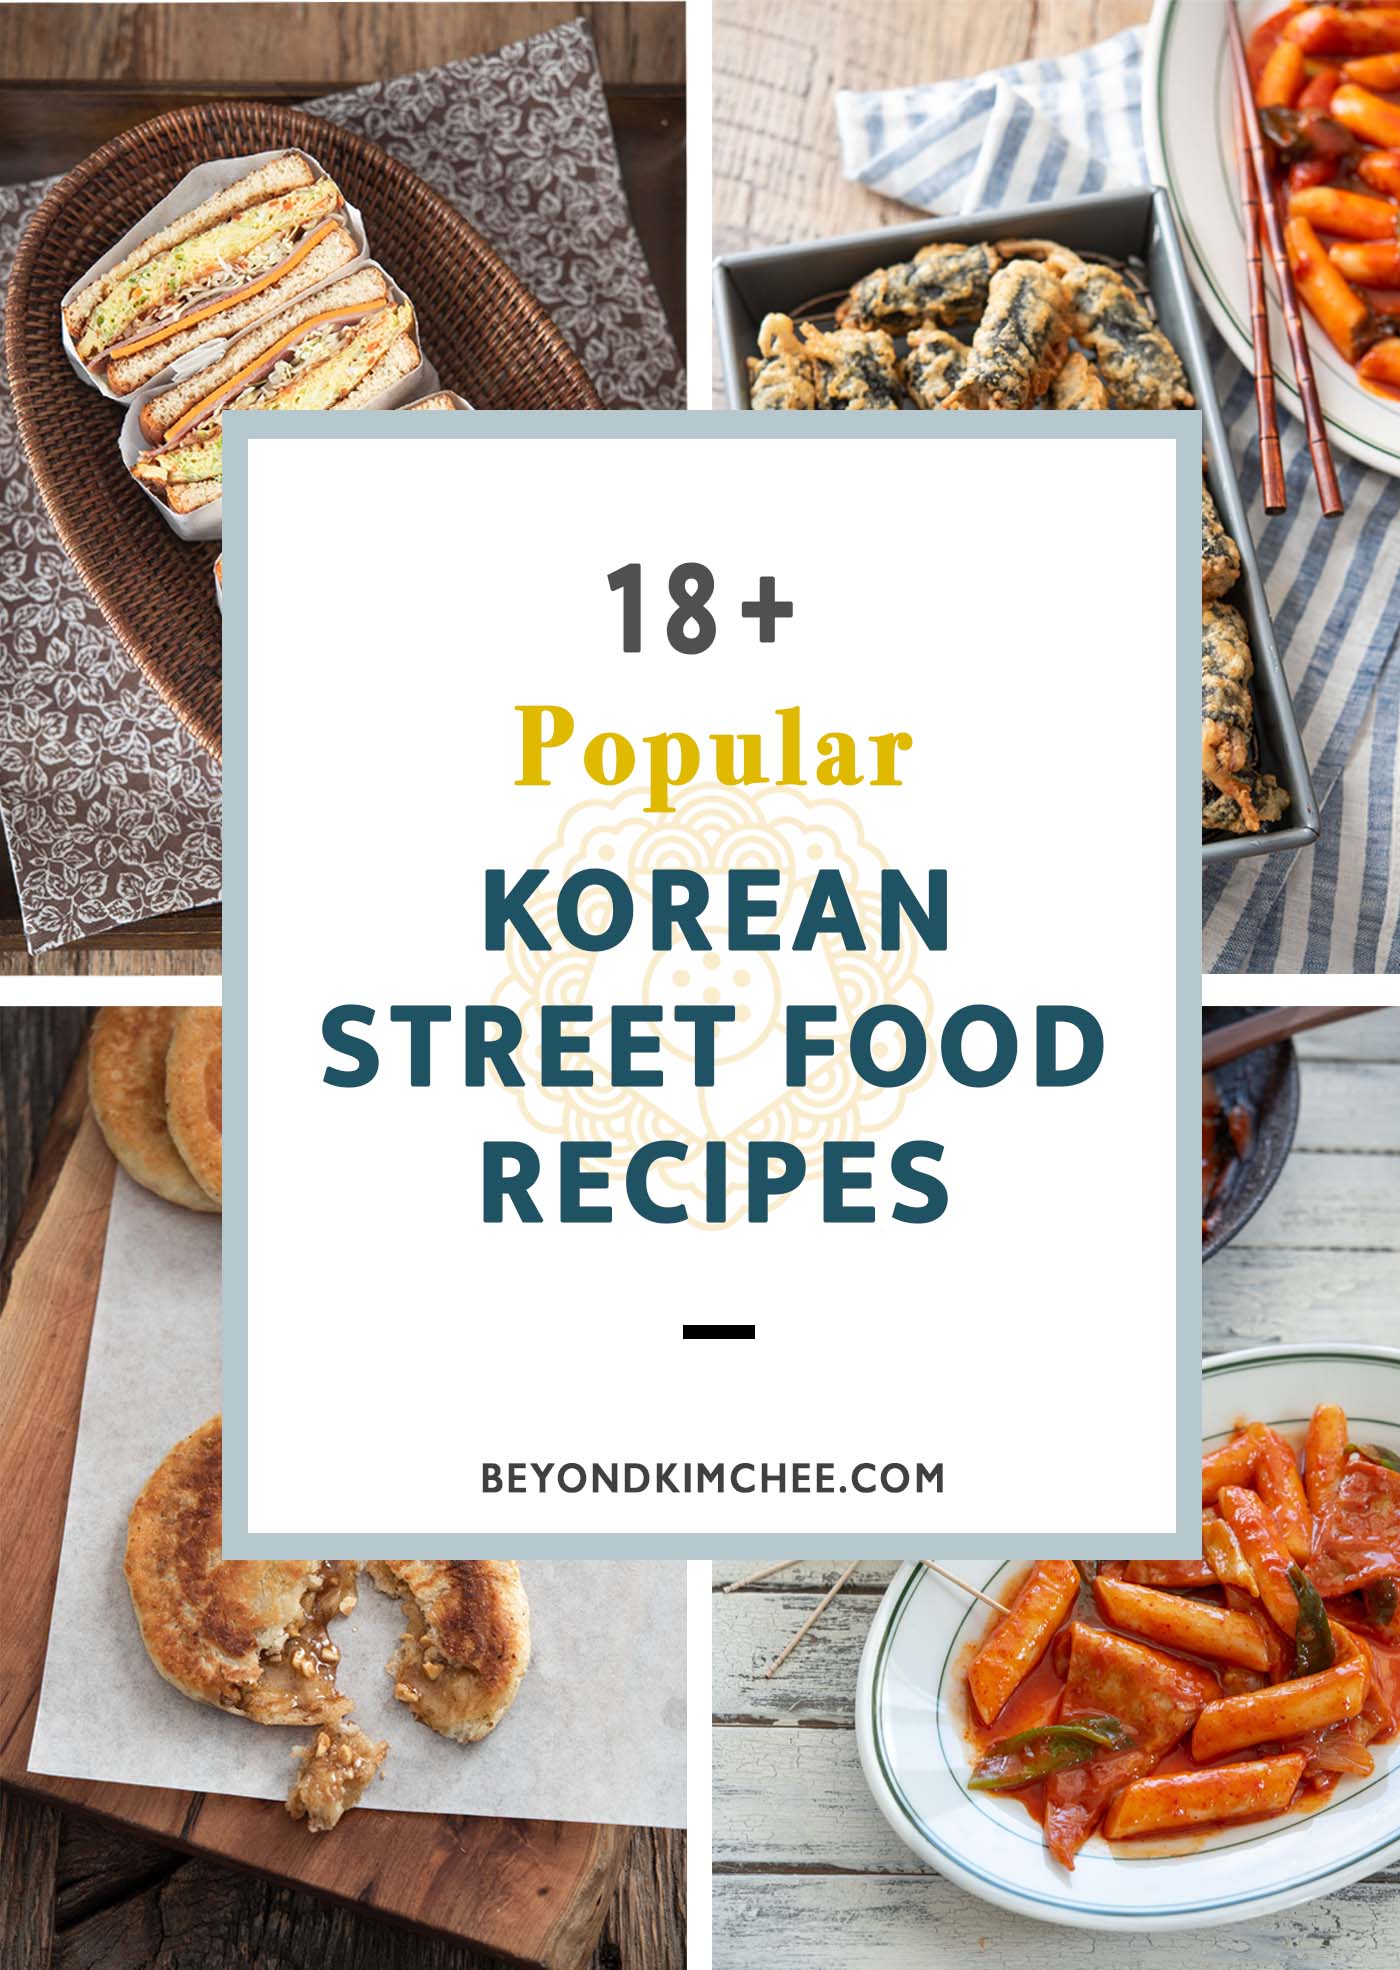 Korean street food recipes collection